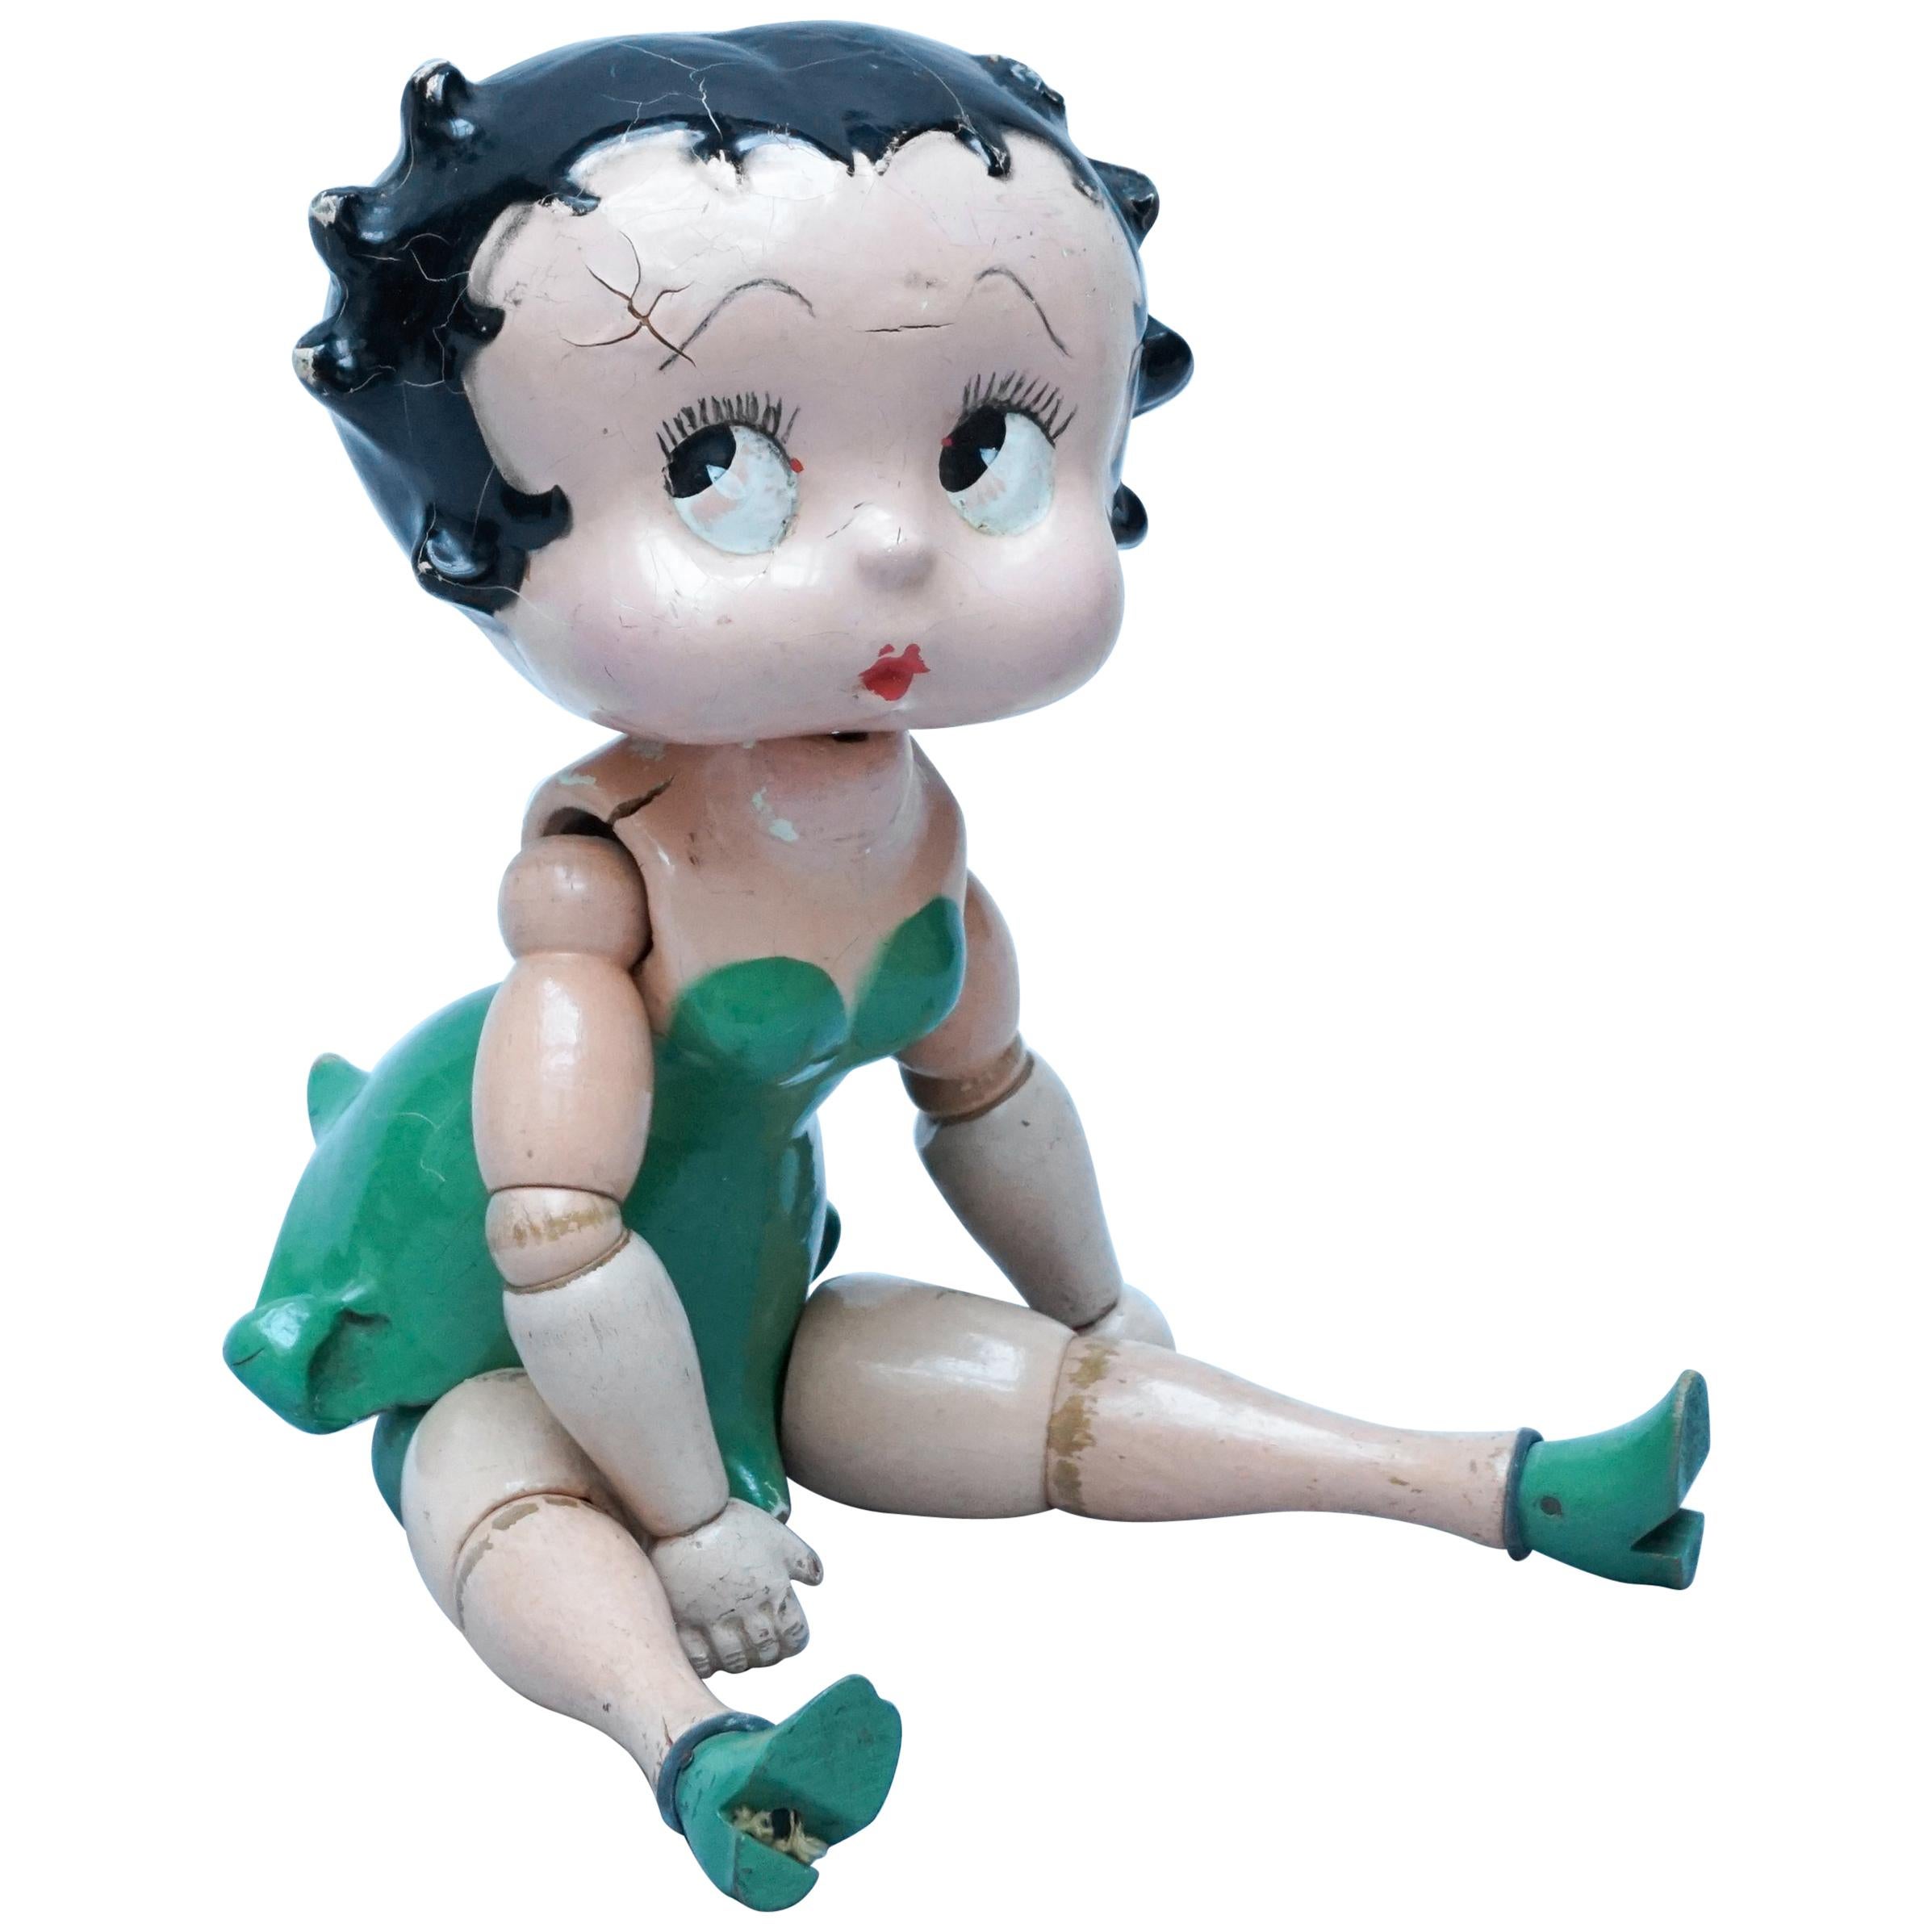 Vintage Betty Boop Doll www.np.gov.lk